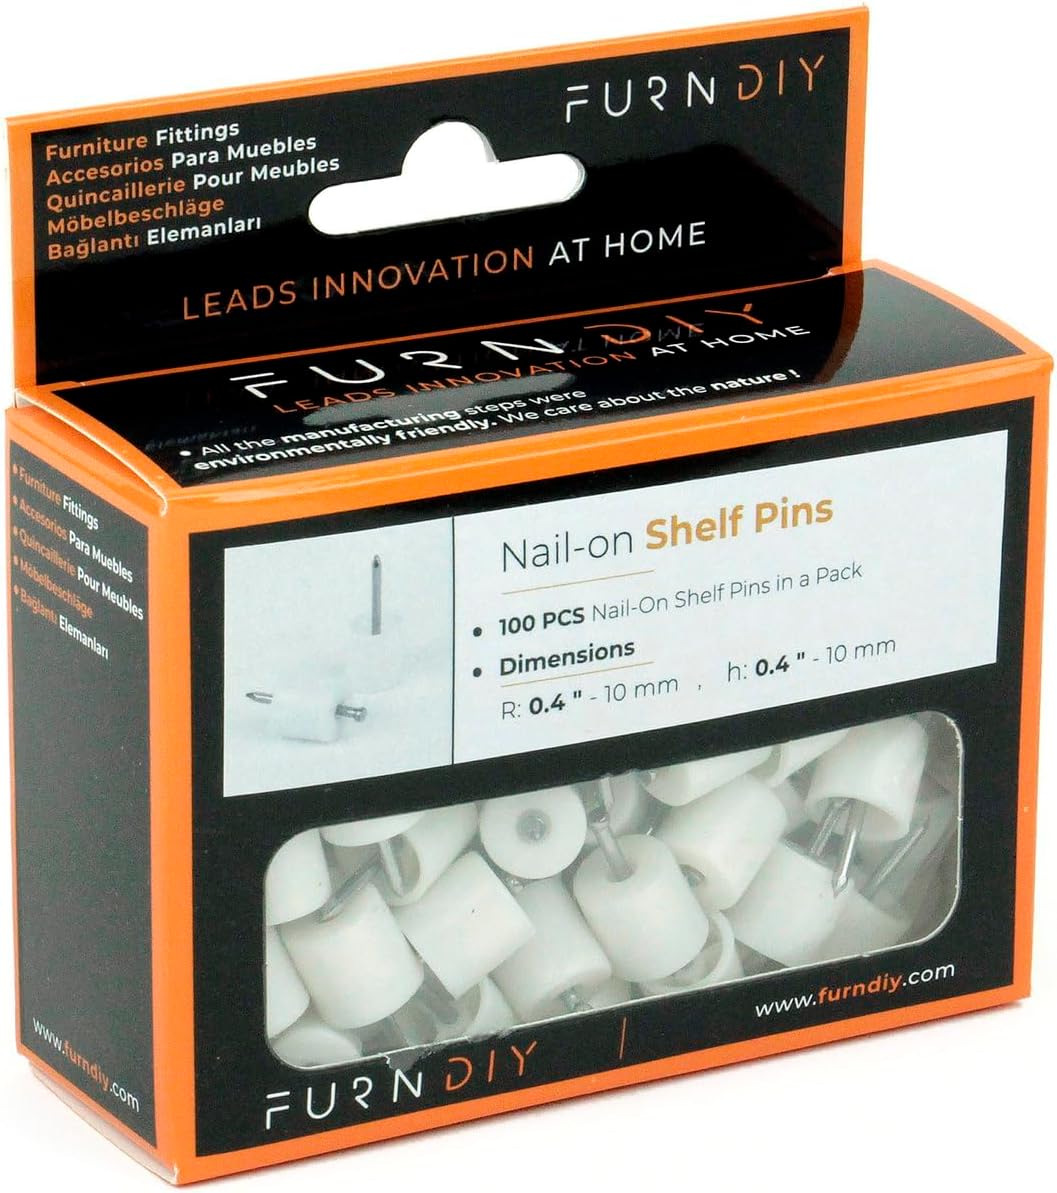 Nail-on Shelf Pin 11mm | Shelves Support | Shelf Holders Pins (100Pcs, White)